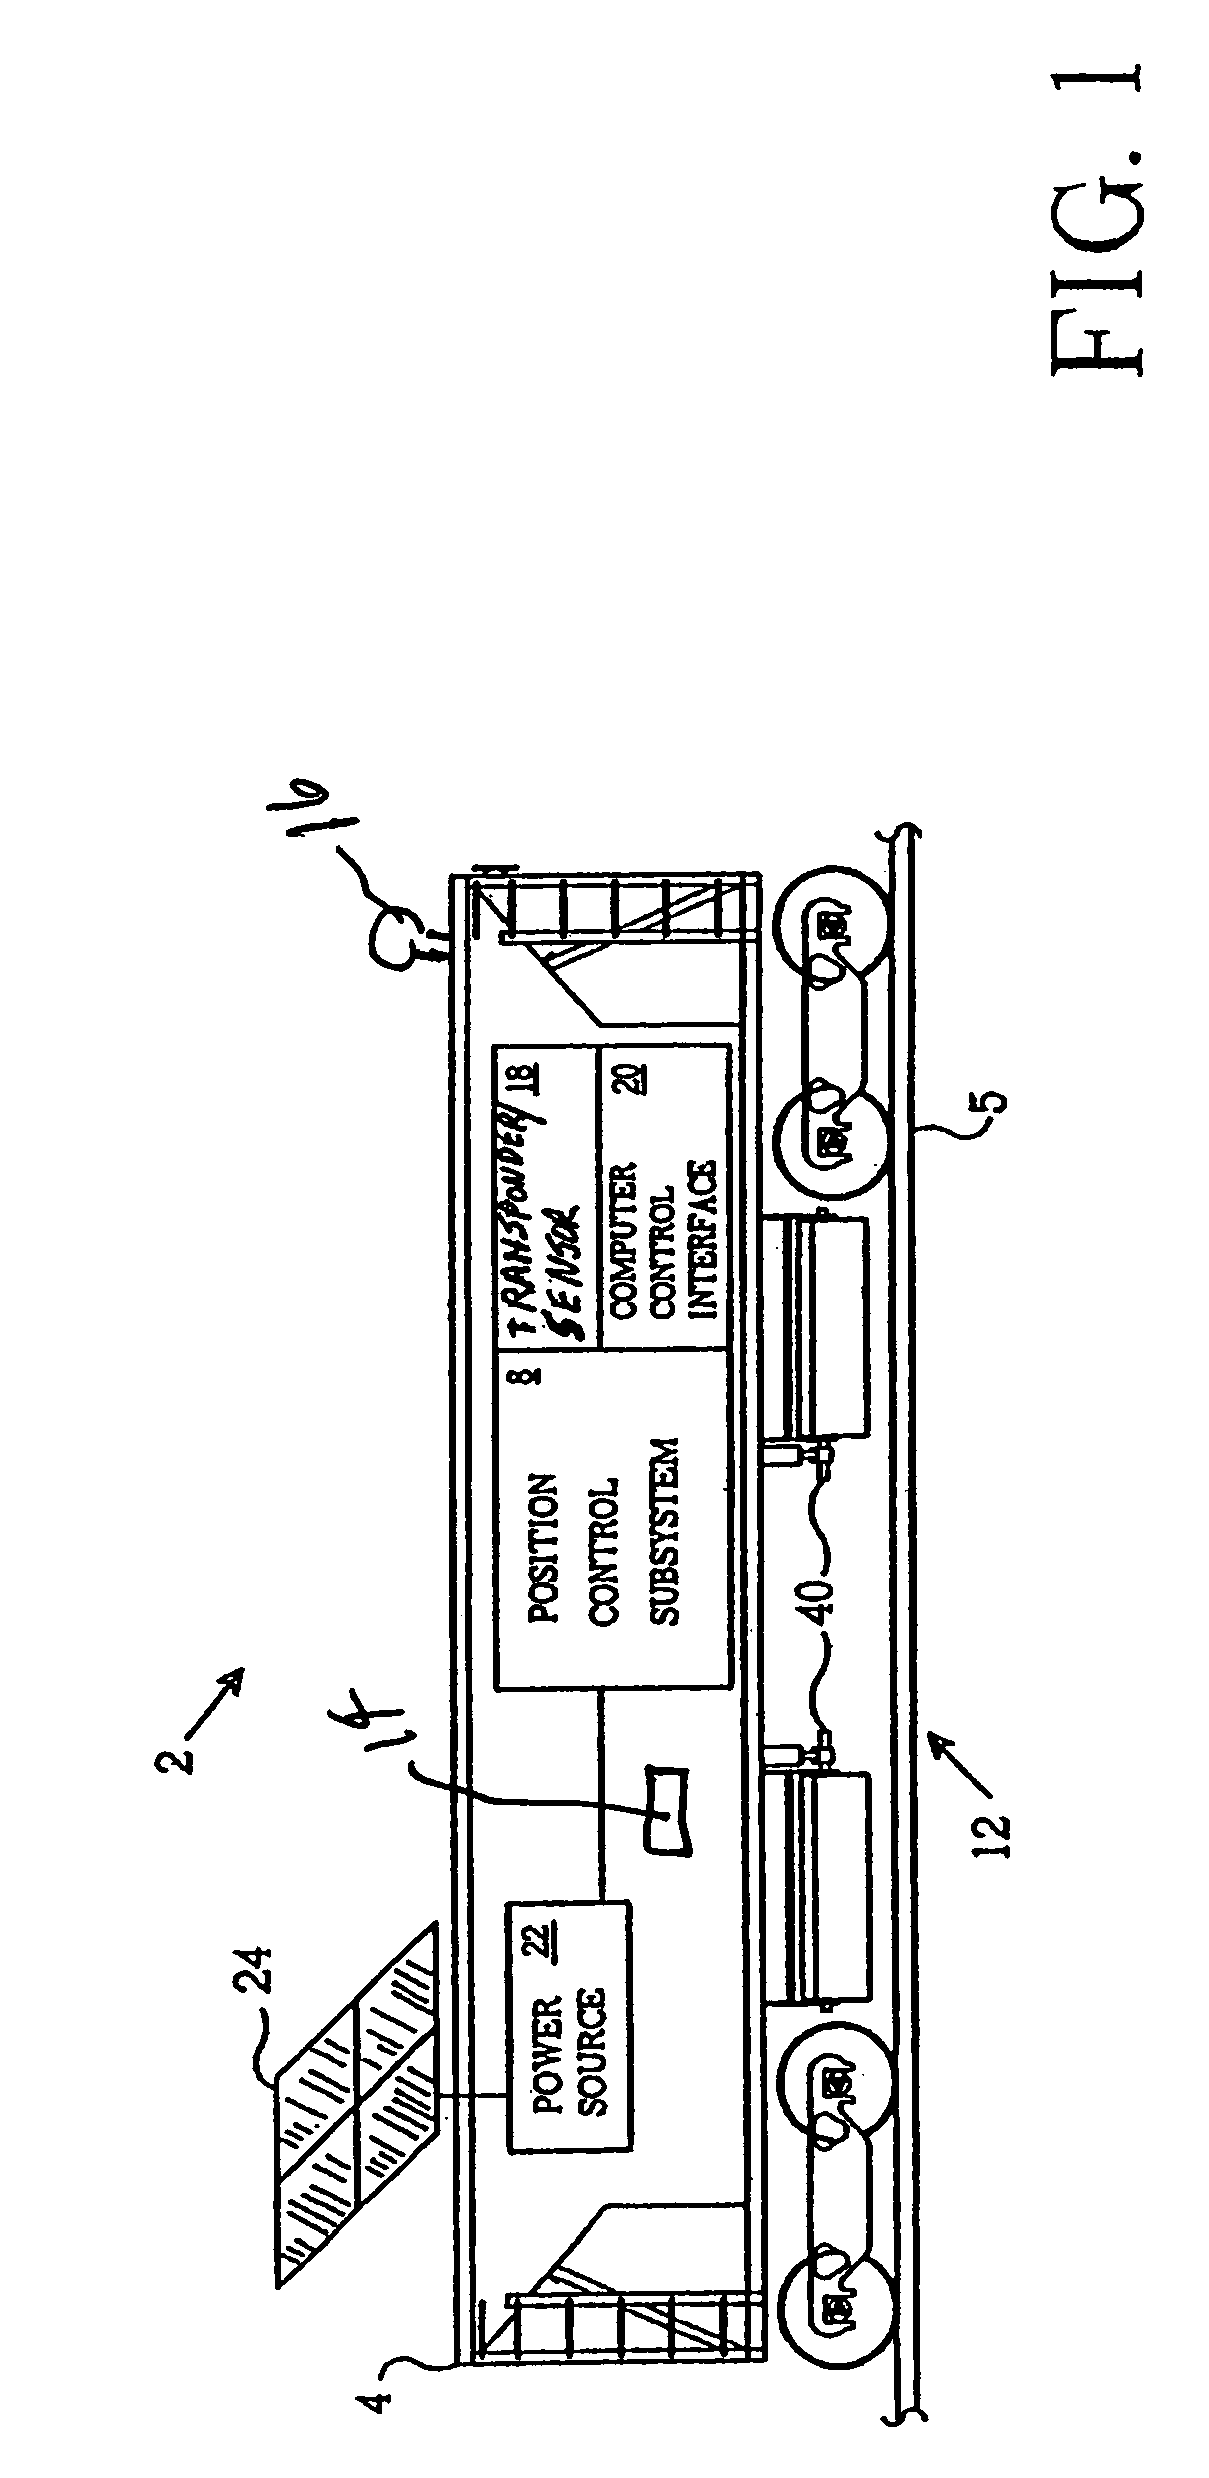 Method and apparatus for applying railway ballast